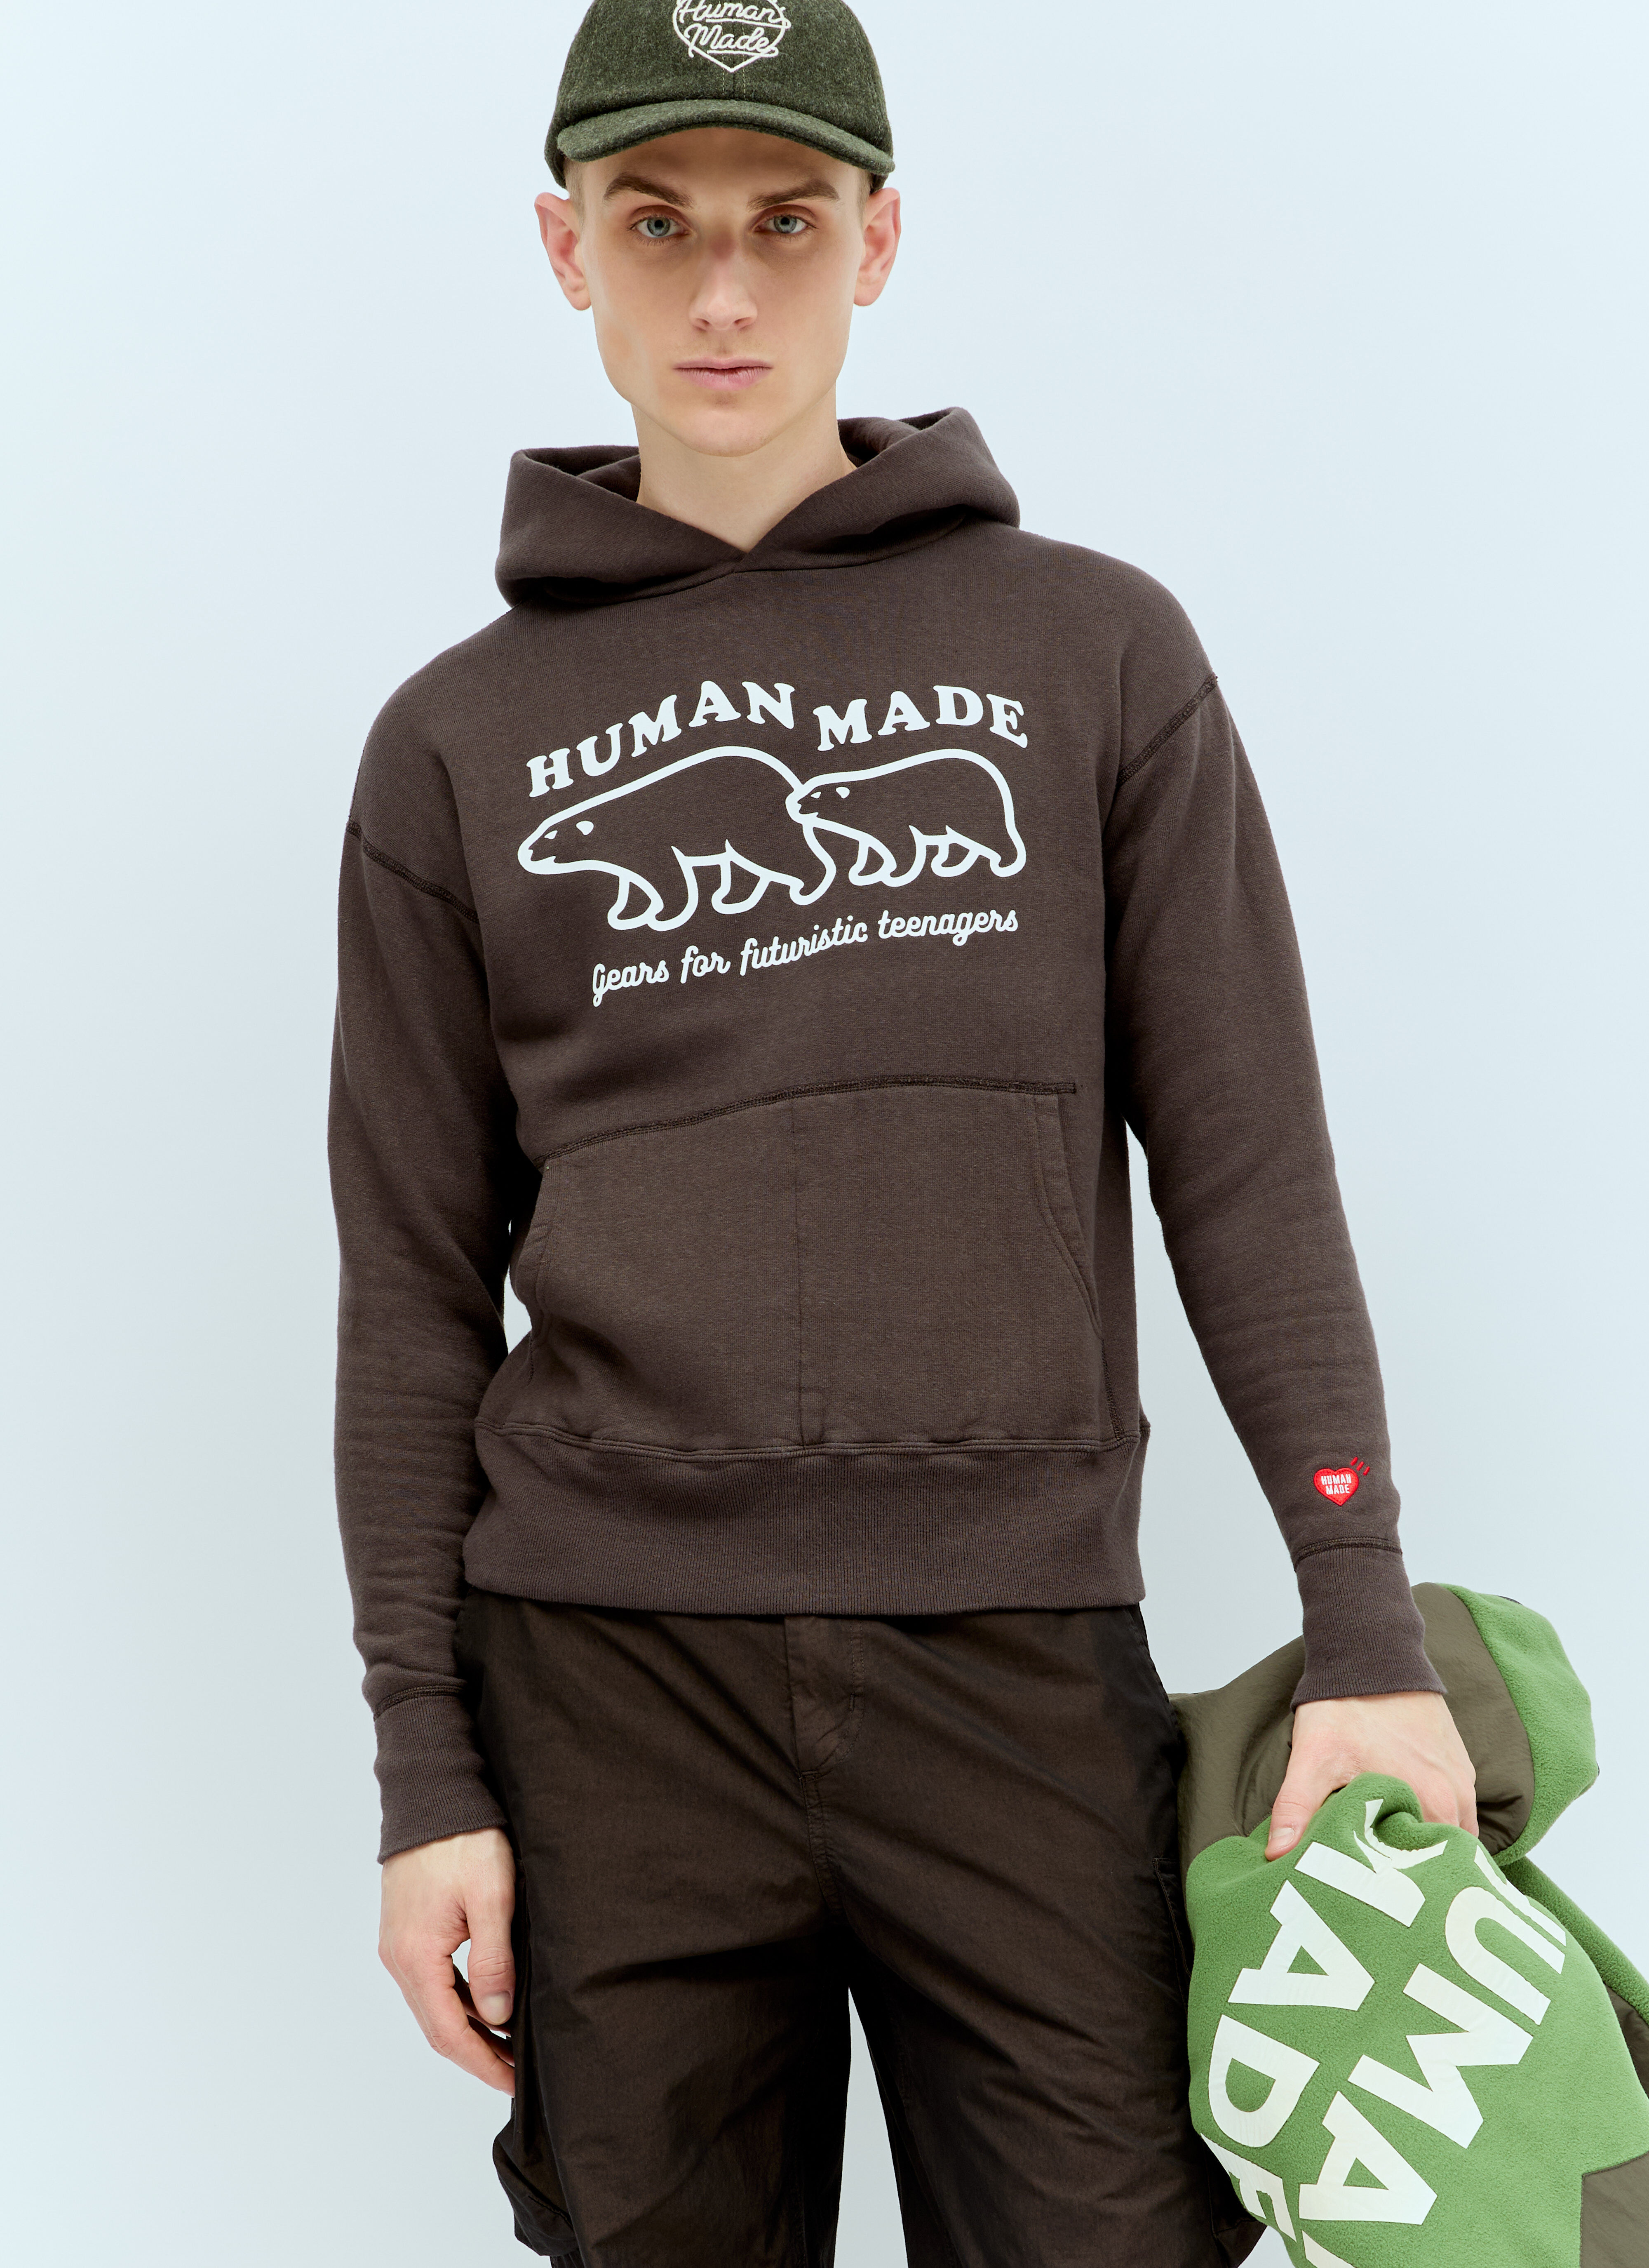 Human Made Tsuriami 连帽运动衫 绿色 hmd0156001